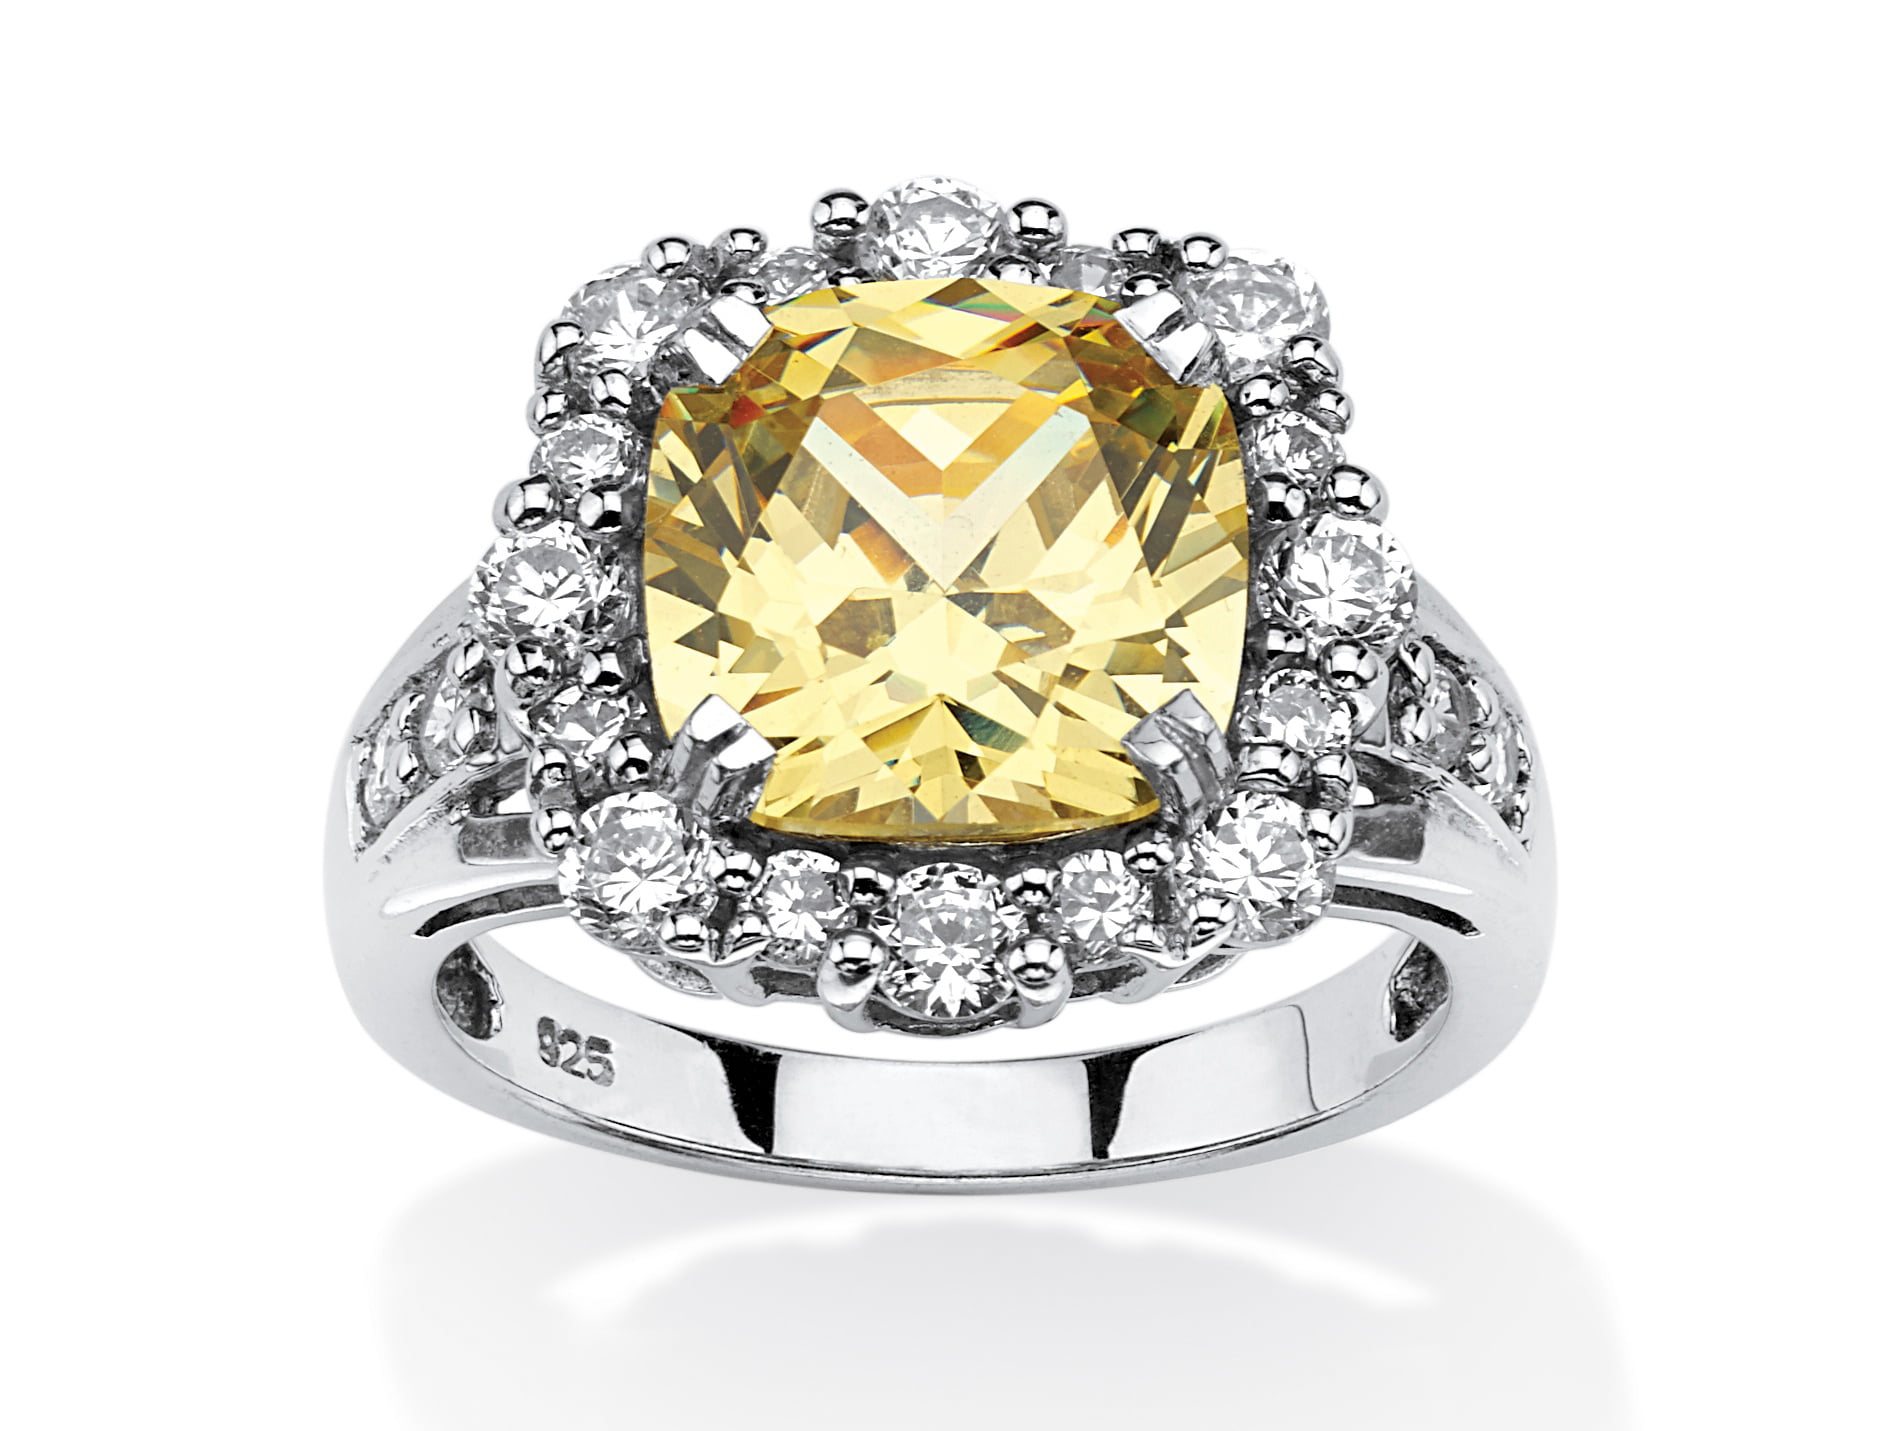 GLAMOROUS 10CT FANCY CANARY YELLOW DIAMOND RING PRINCESS CUT HALO ENGAGEMENT 925 